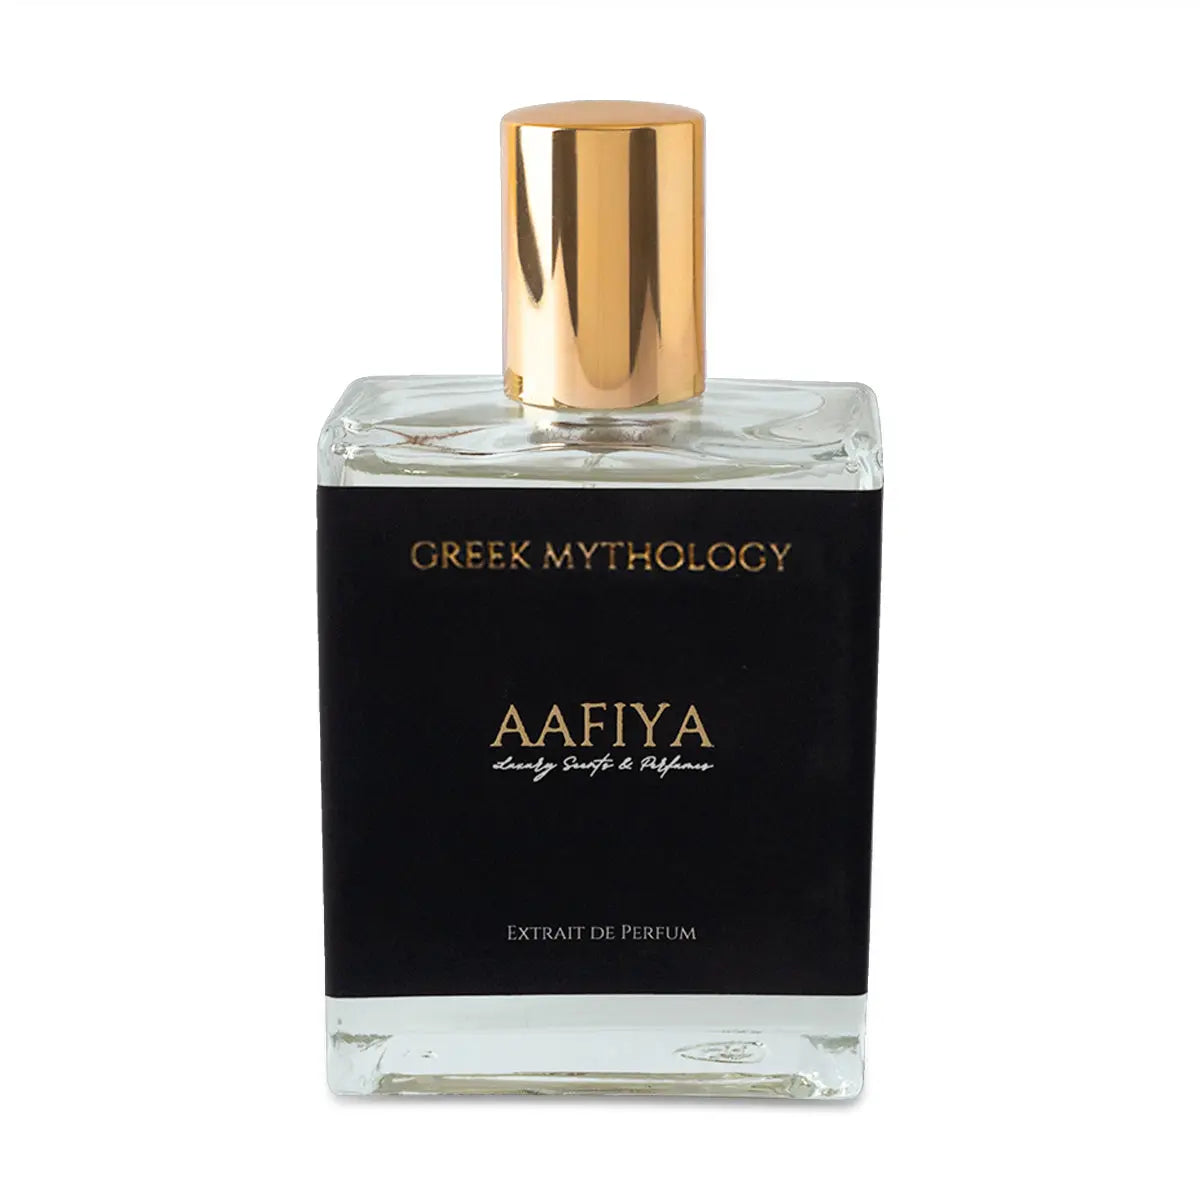 Greek Mythology Aafiya Luxury Scents & Perfumes